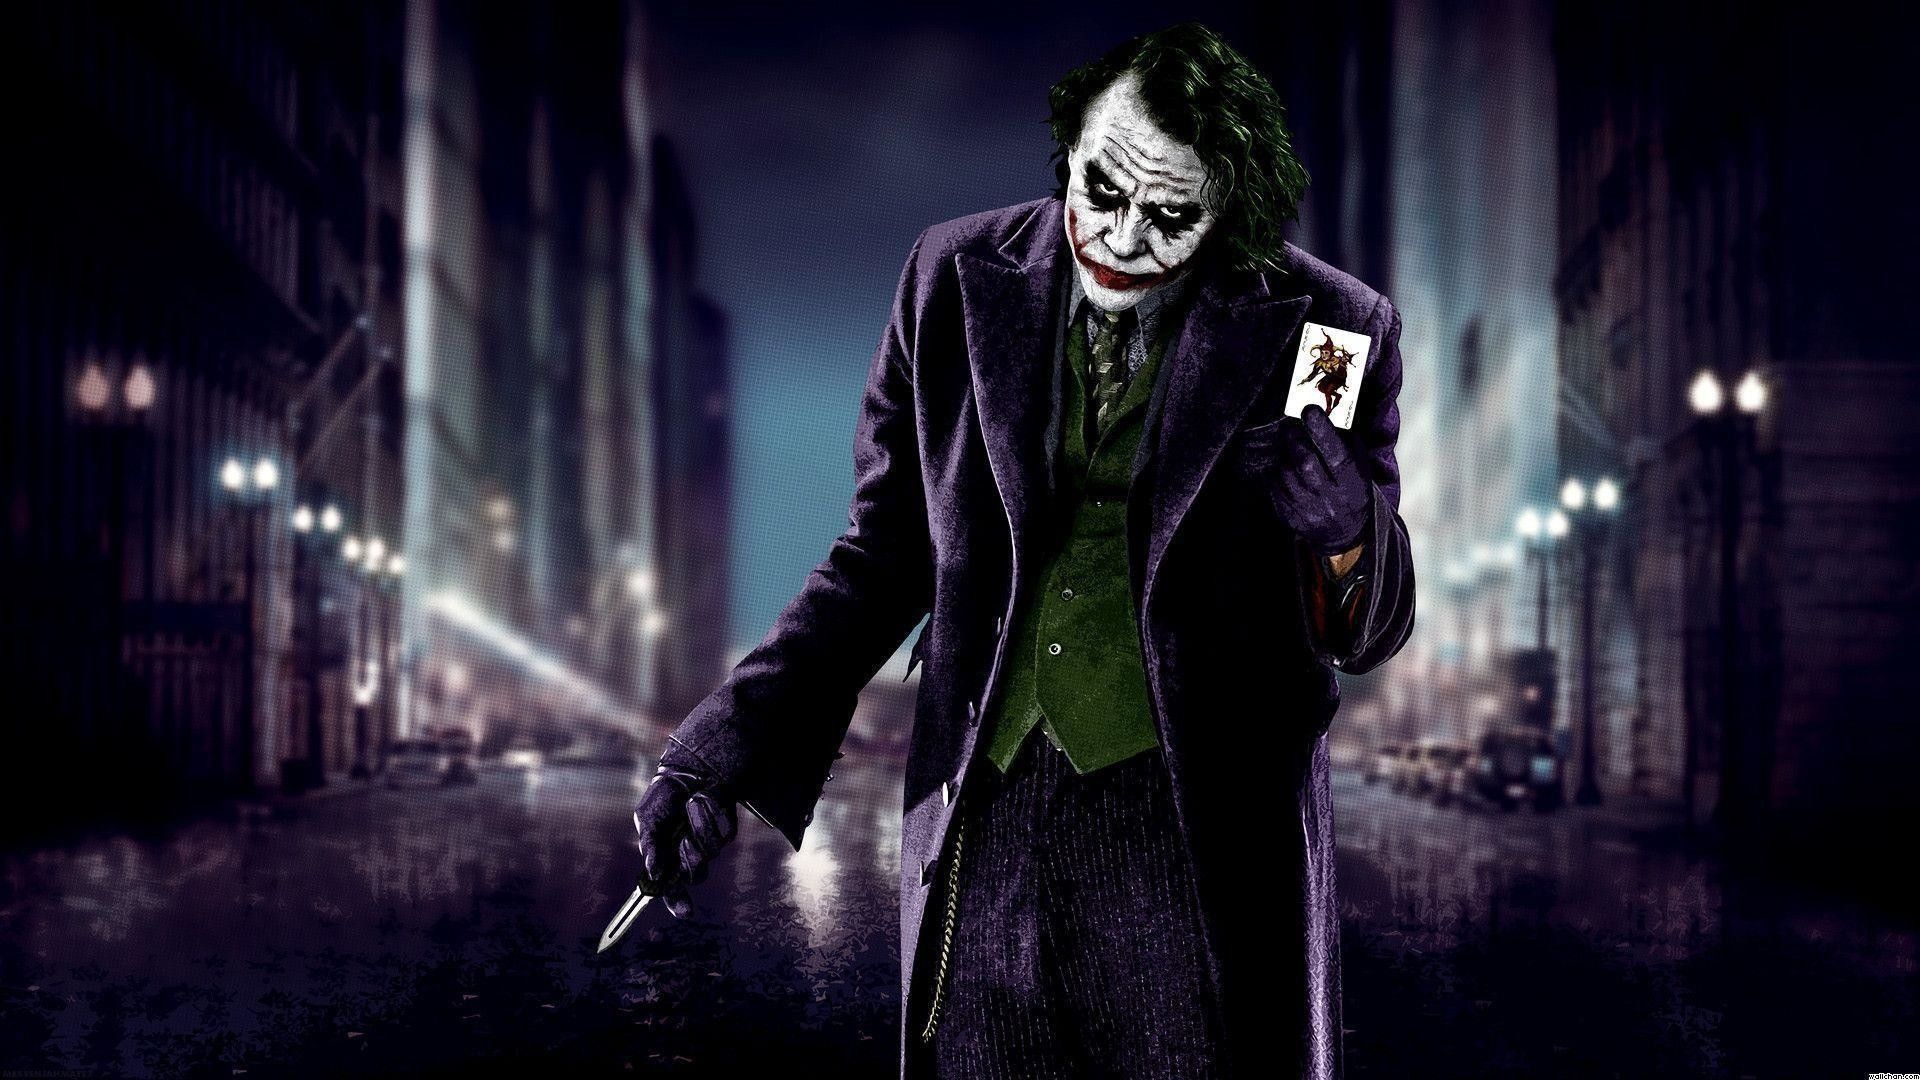 Más de 80 fondos de pantalla de Batman Joker